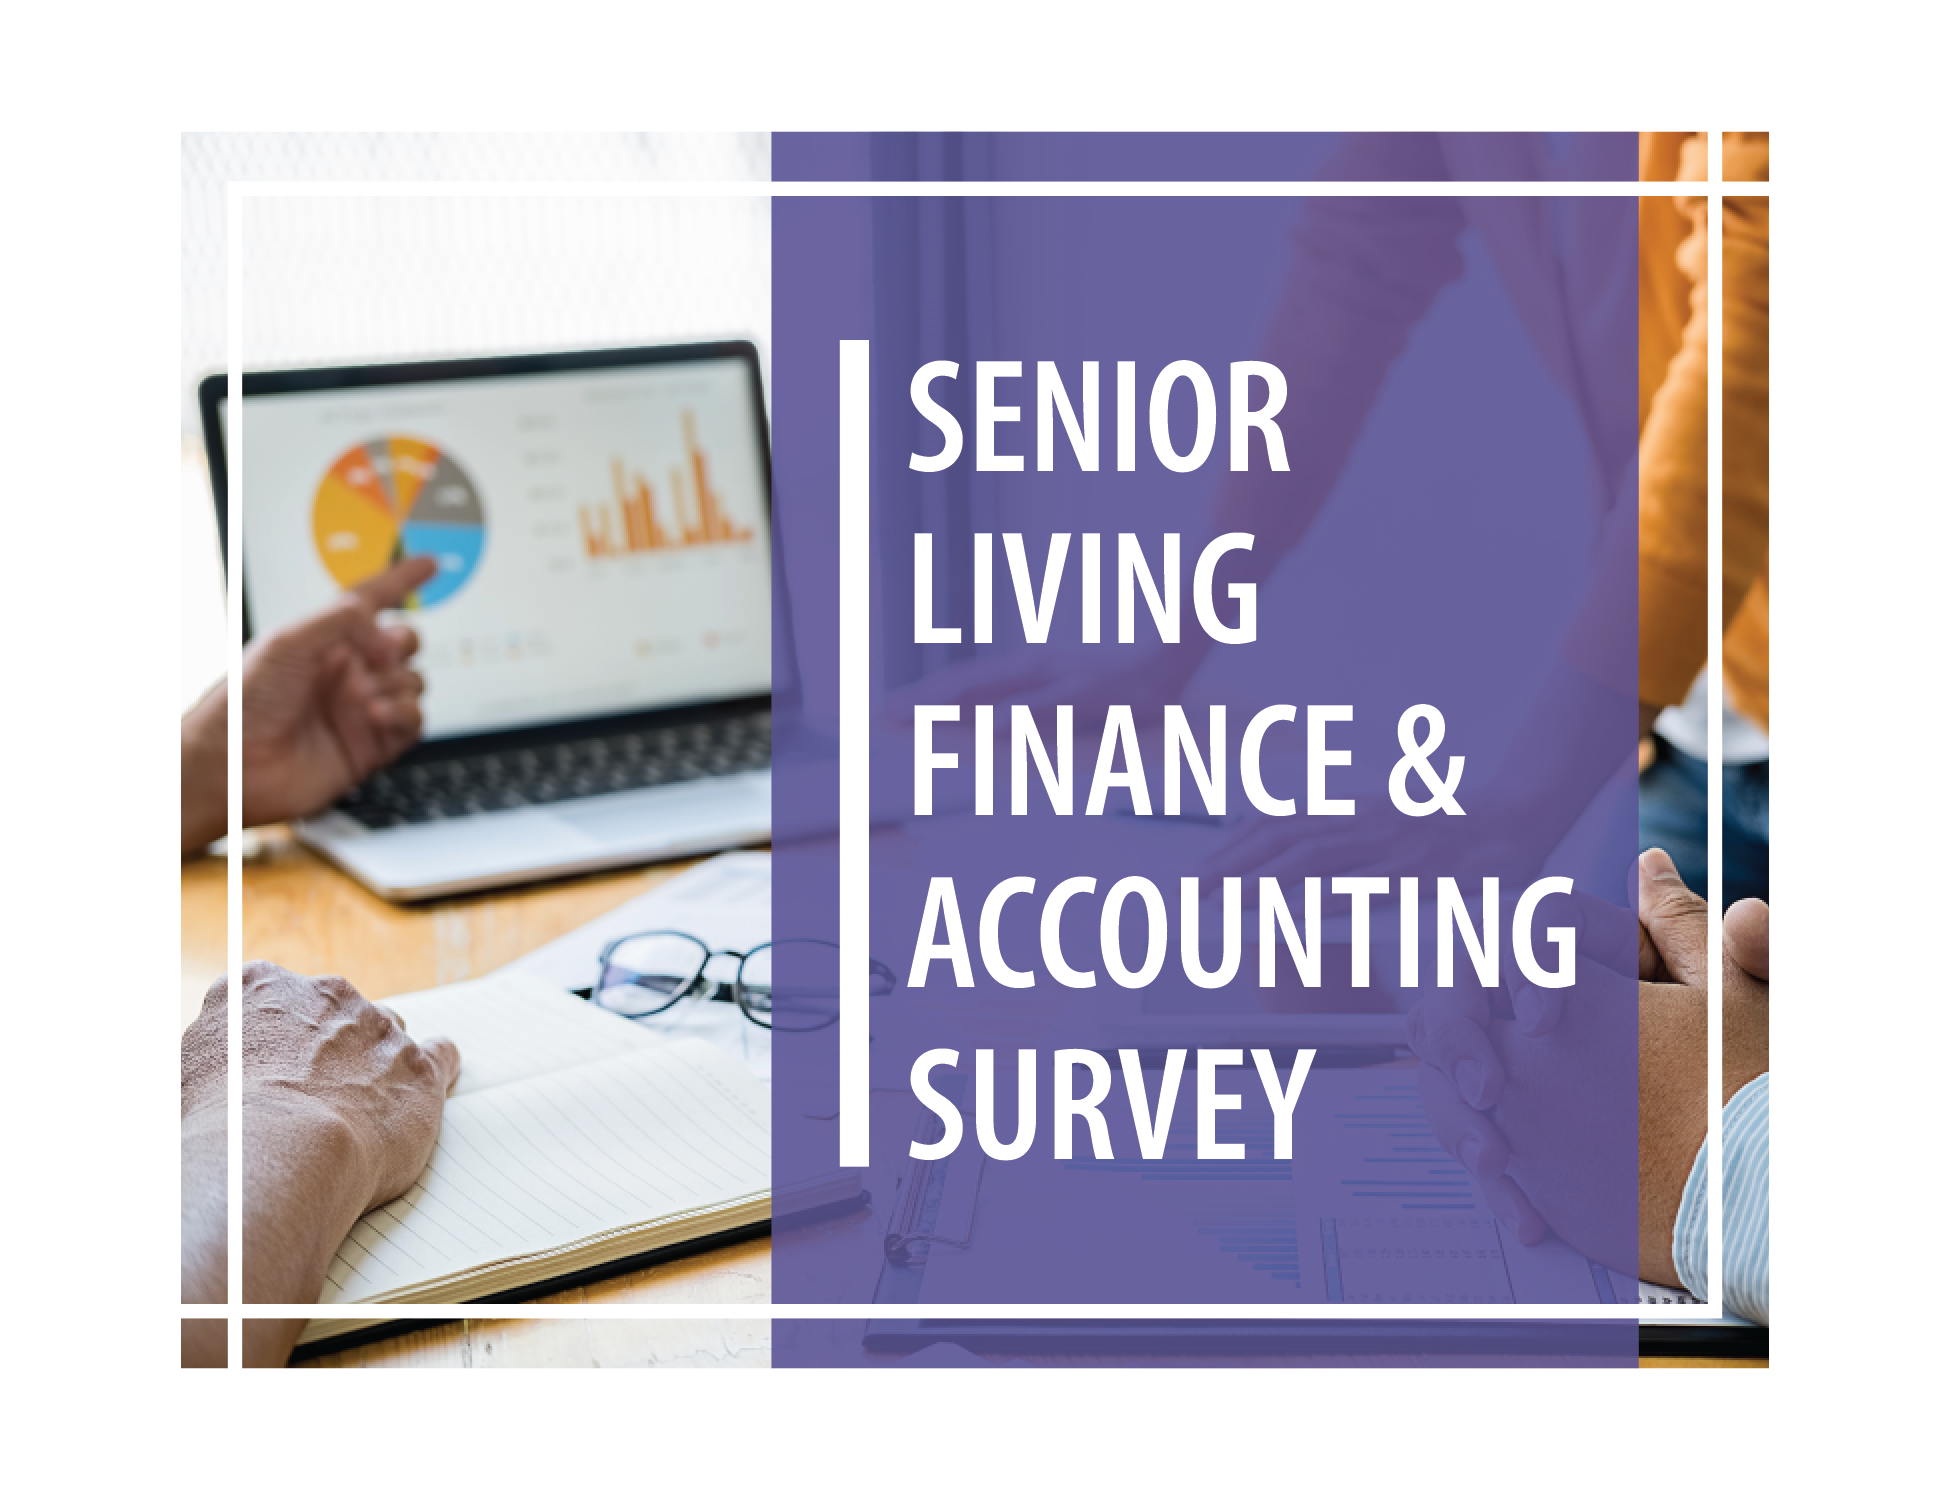 Persona Survey CTA_AccountingAndFinance